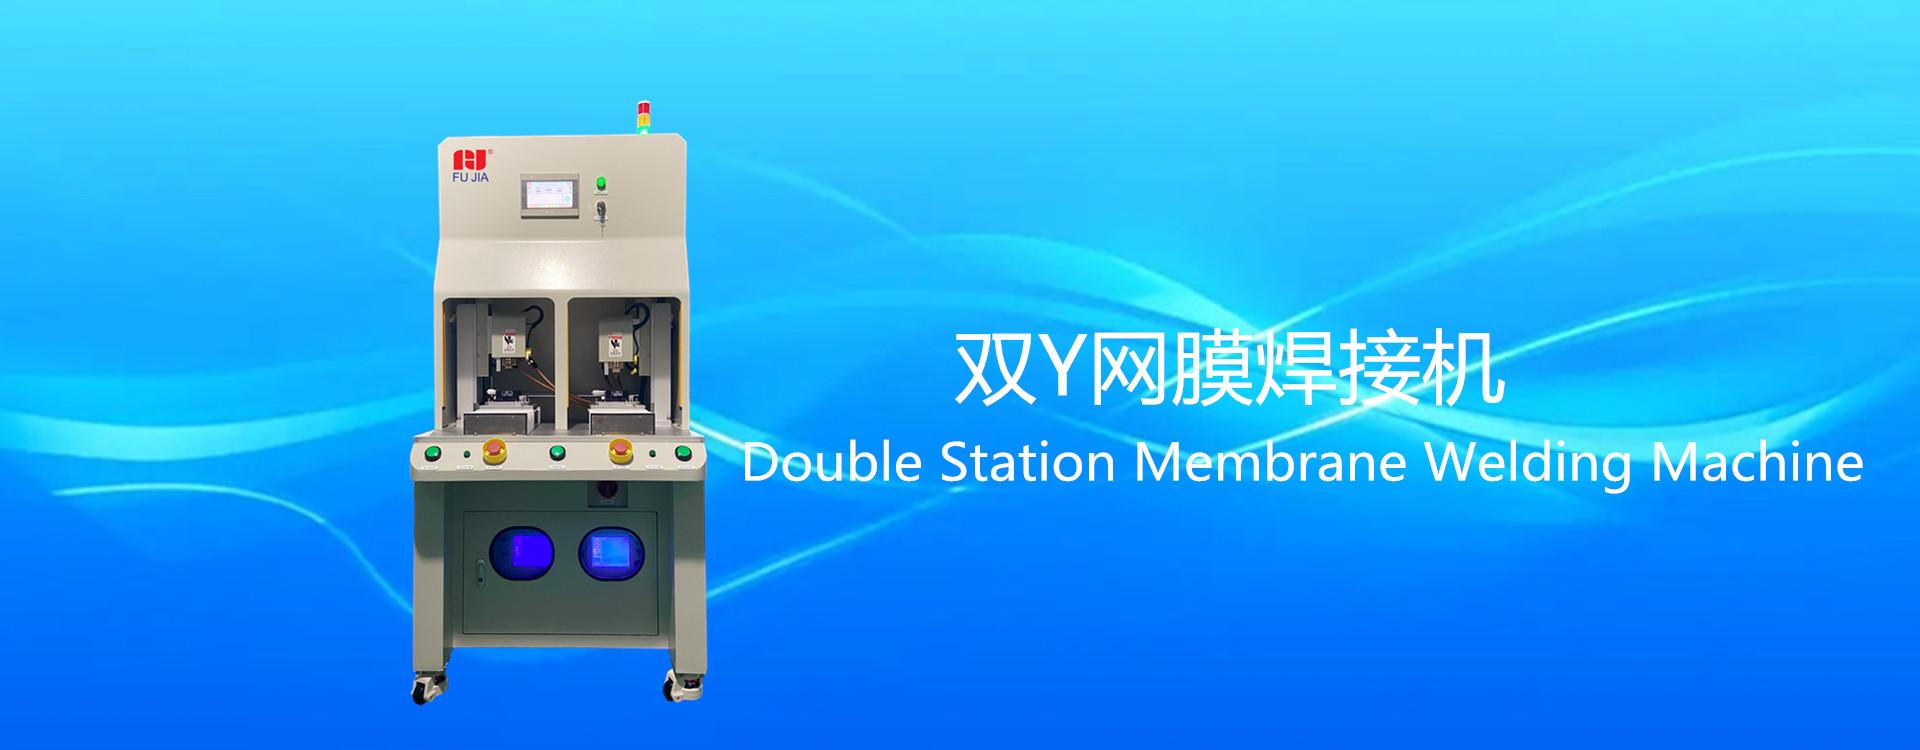 Double Station Membrane Welding Machine